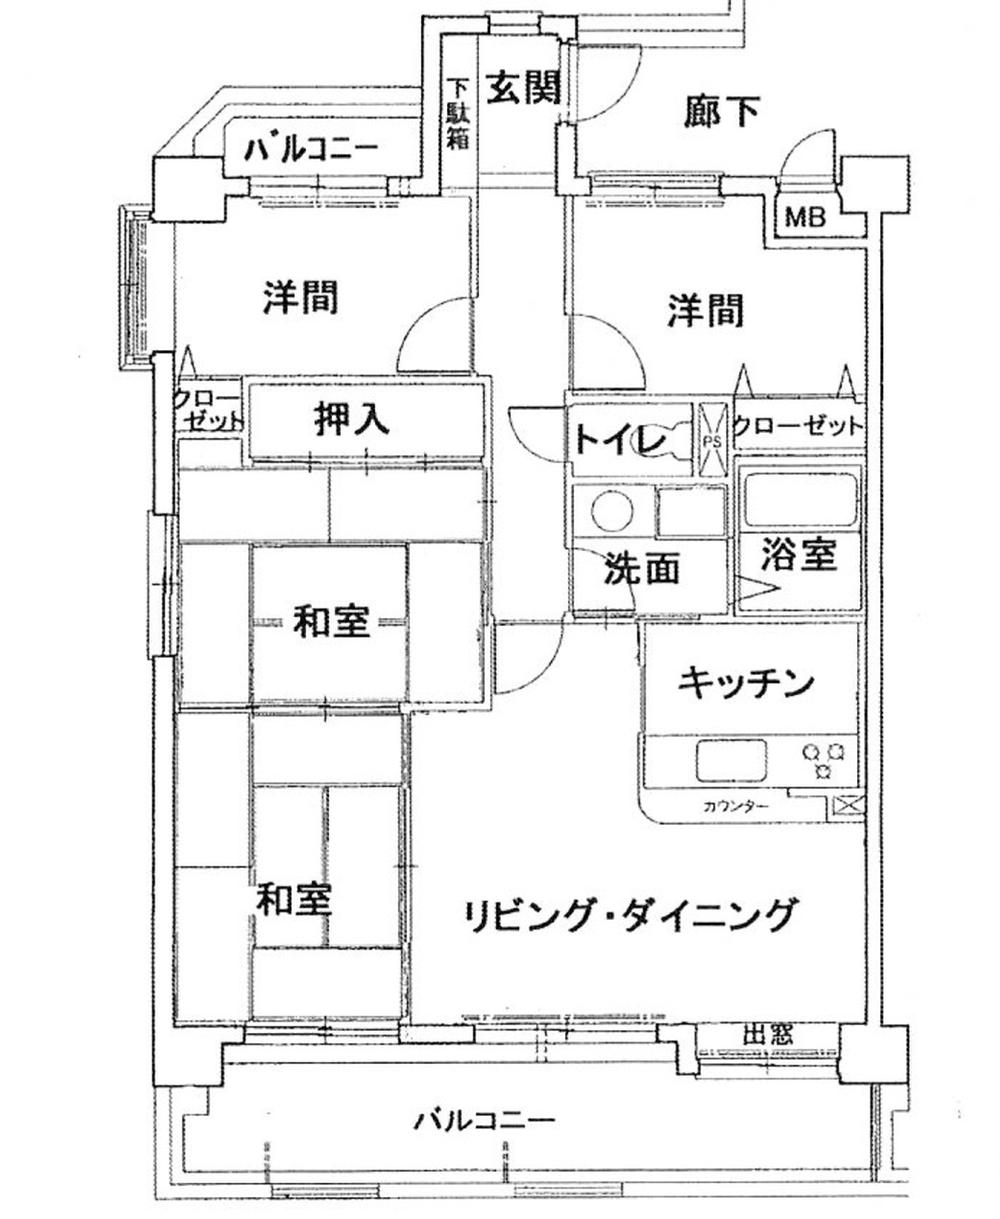 Floor plan. 4LDK, Price 15 million yen, Occupied area 78.31 sq m , Balcony area 16.82 sq m